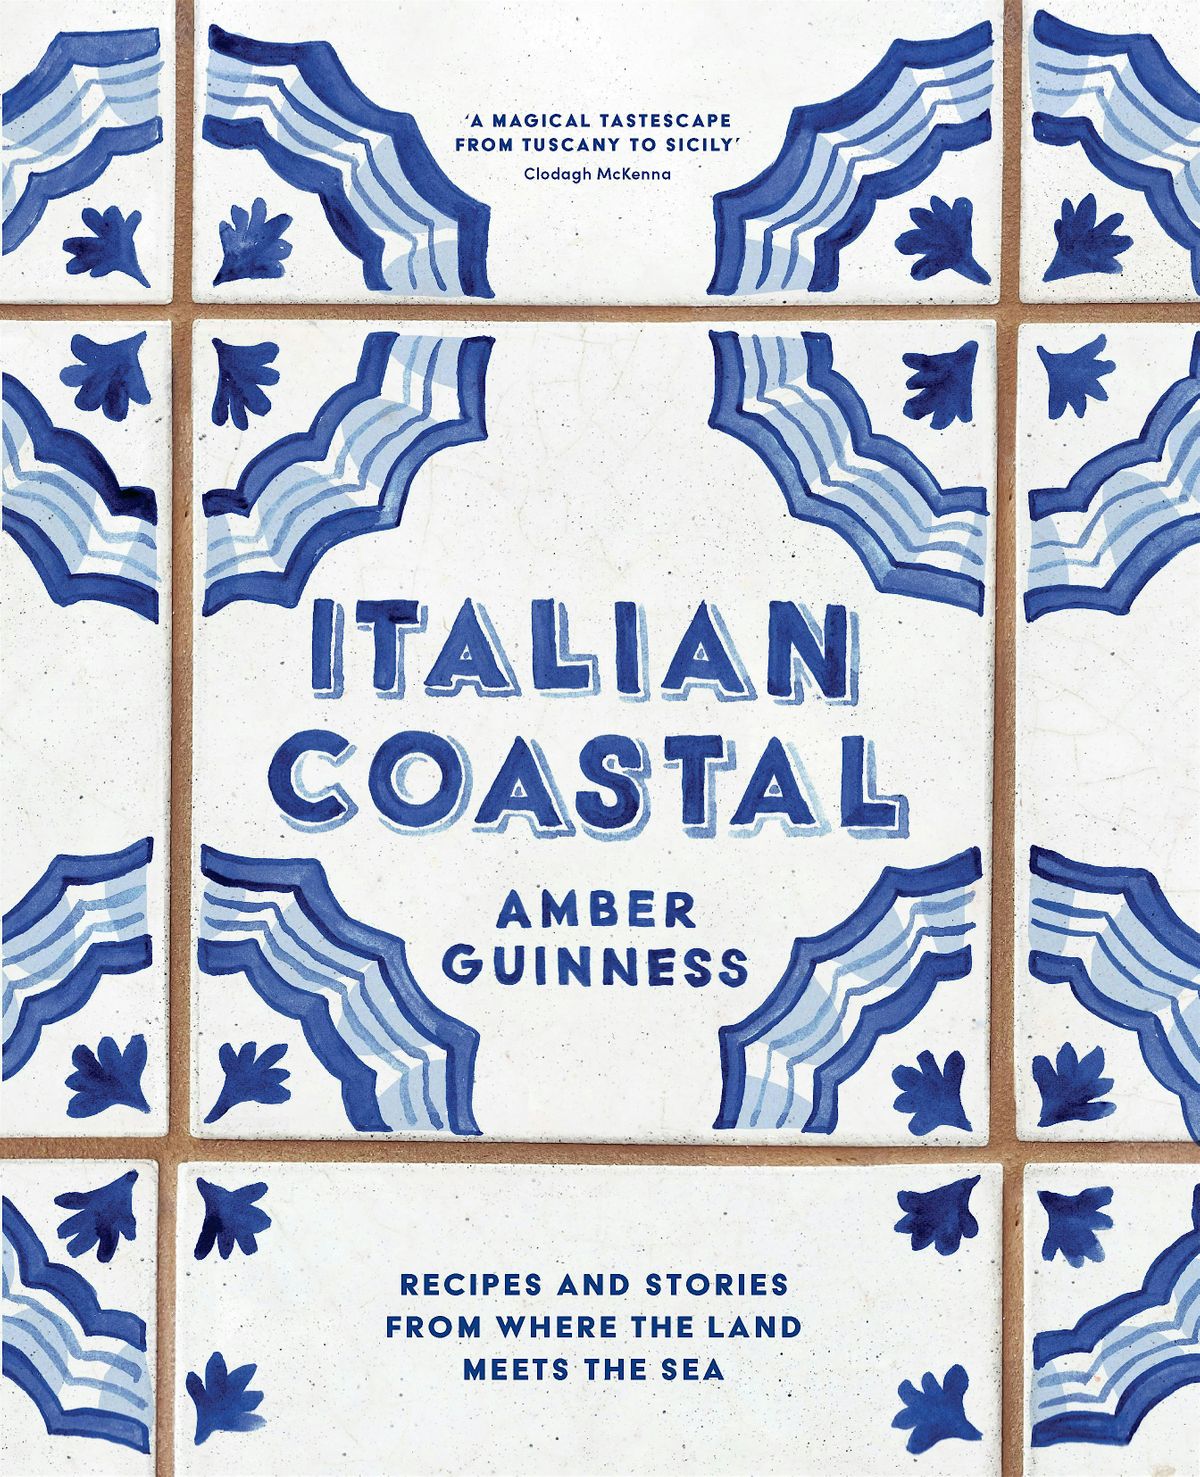 Italian Coastal - an evening with Amber Guinness